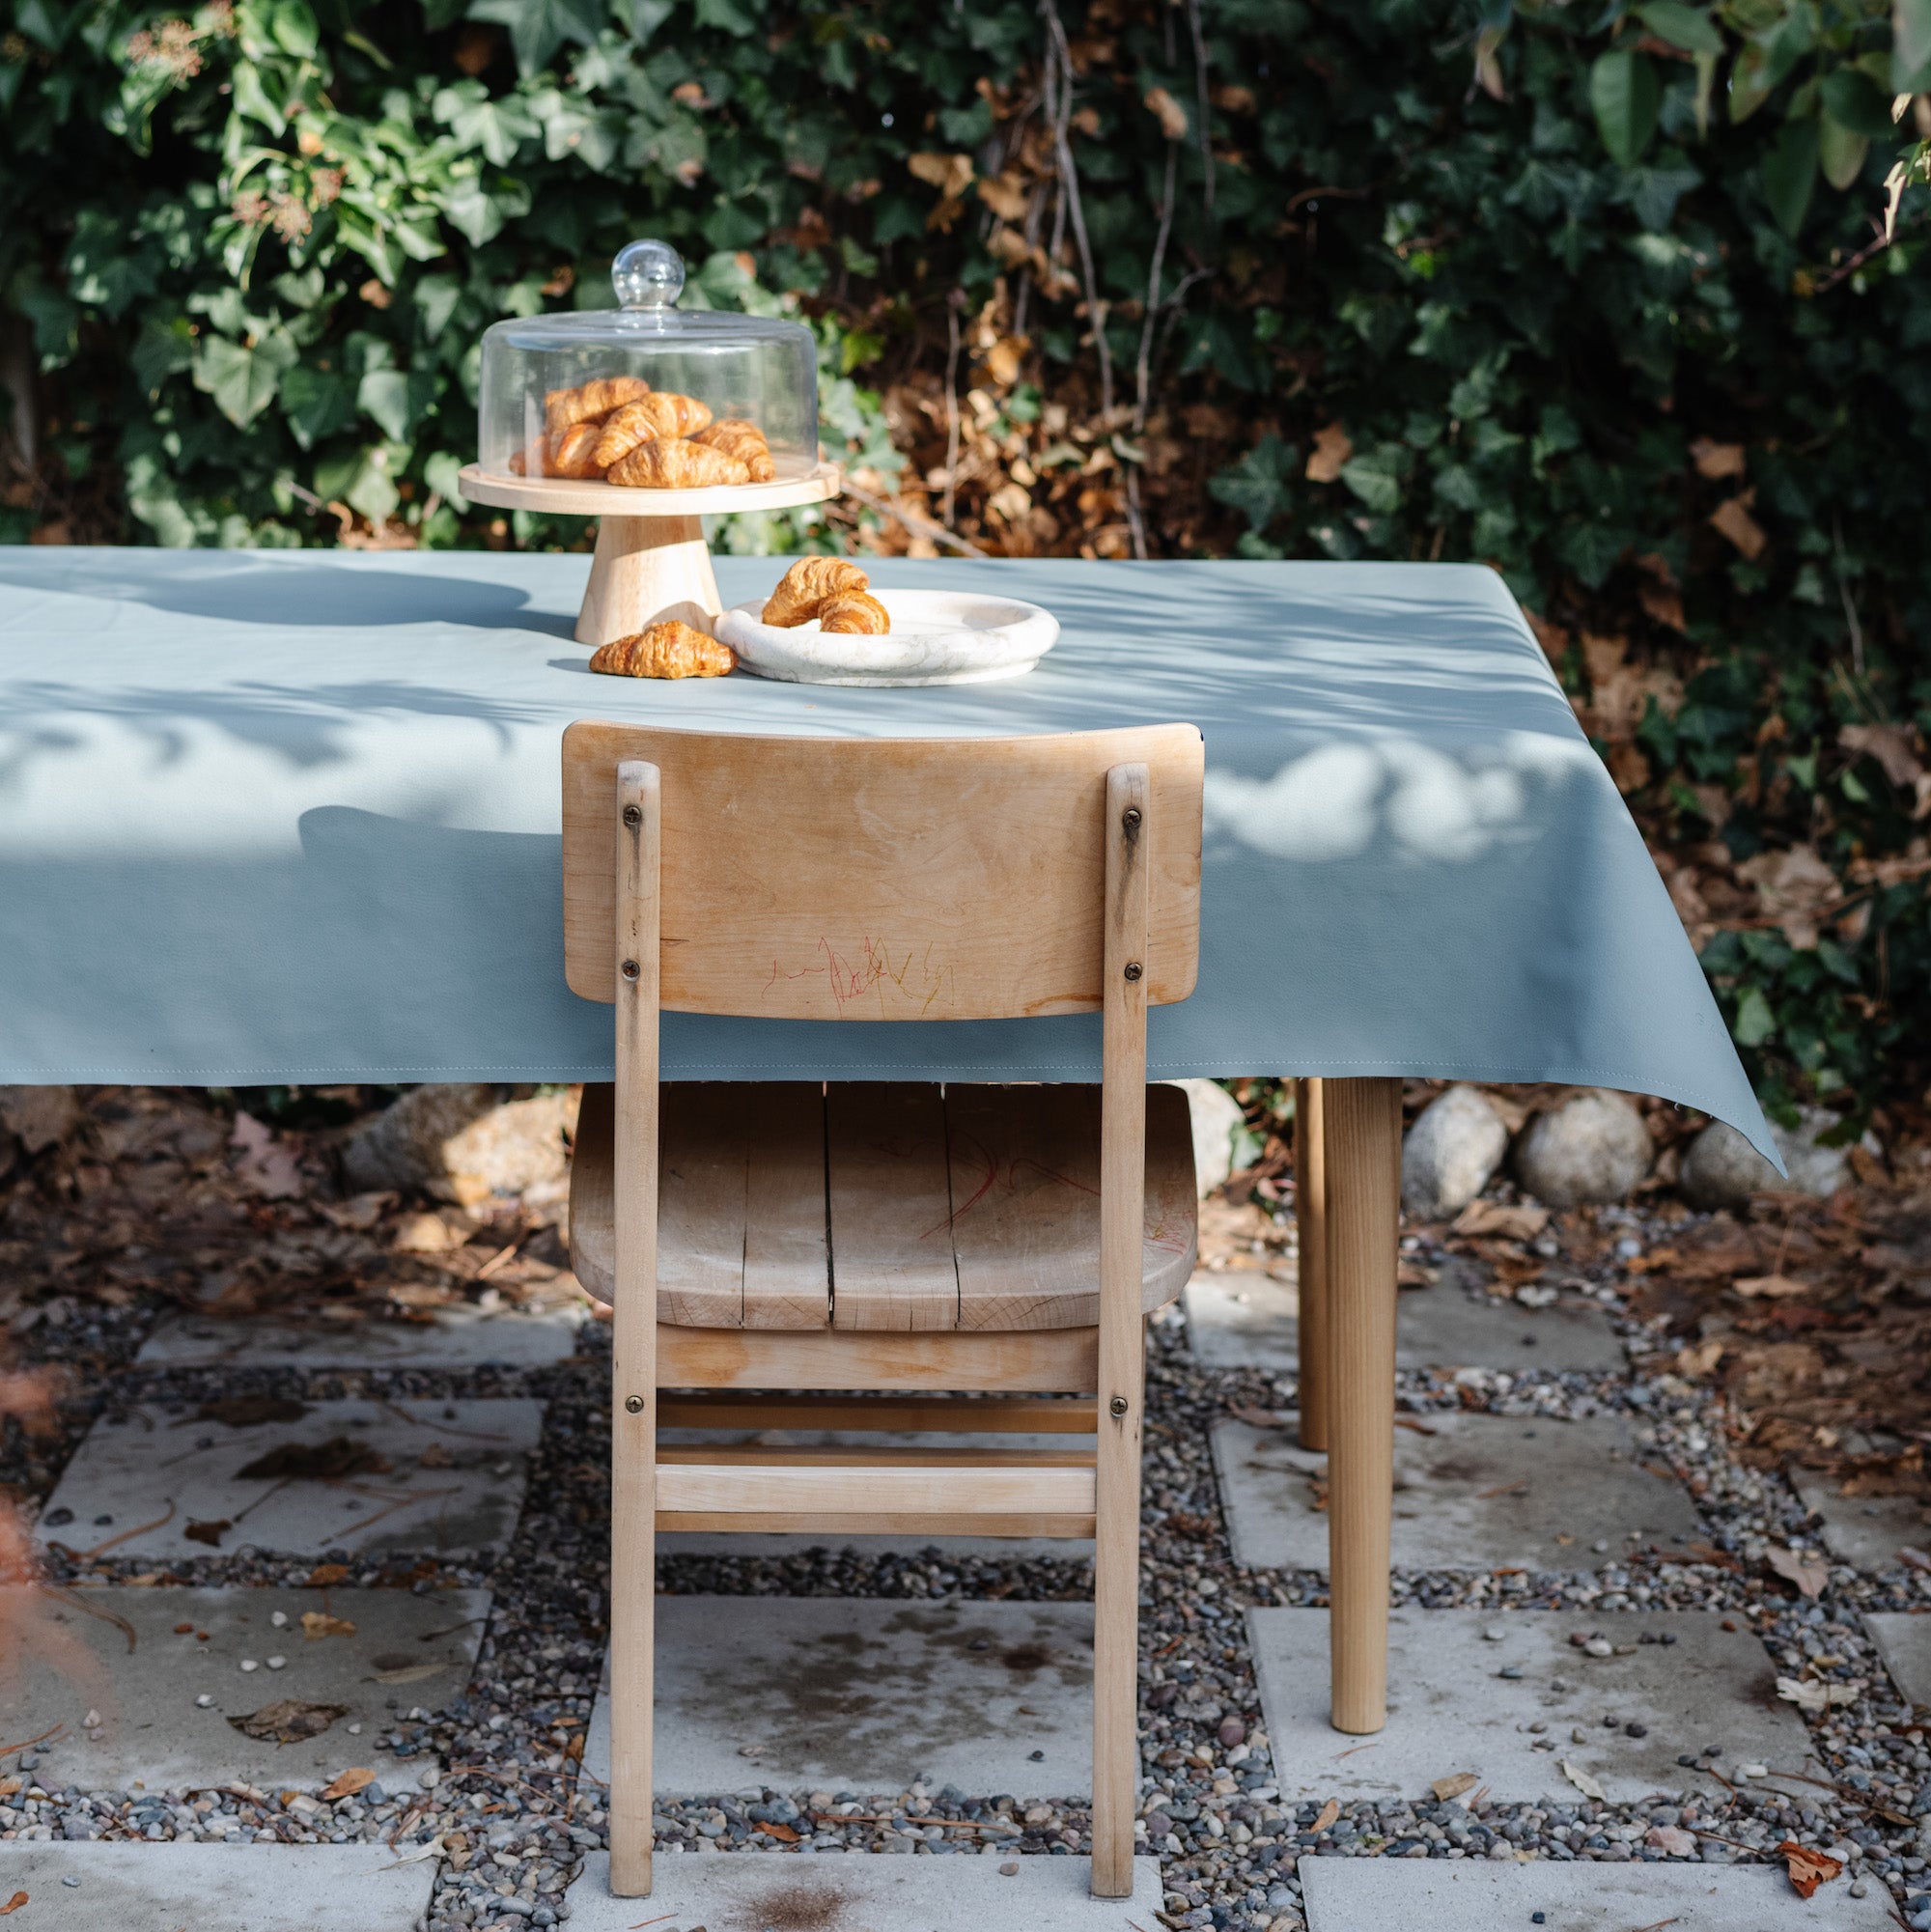 Amalfi@Amalfi Tablecloth on a table outside near greenery